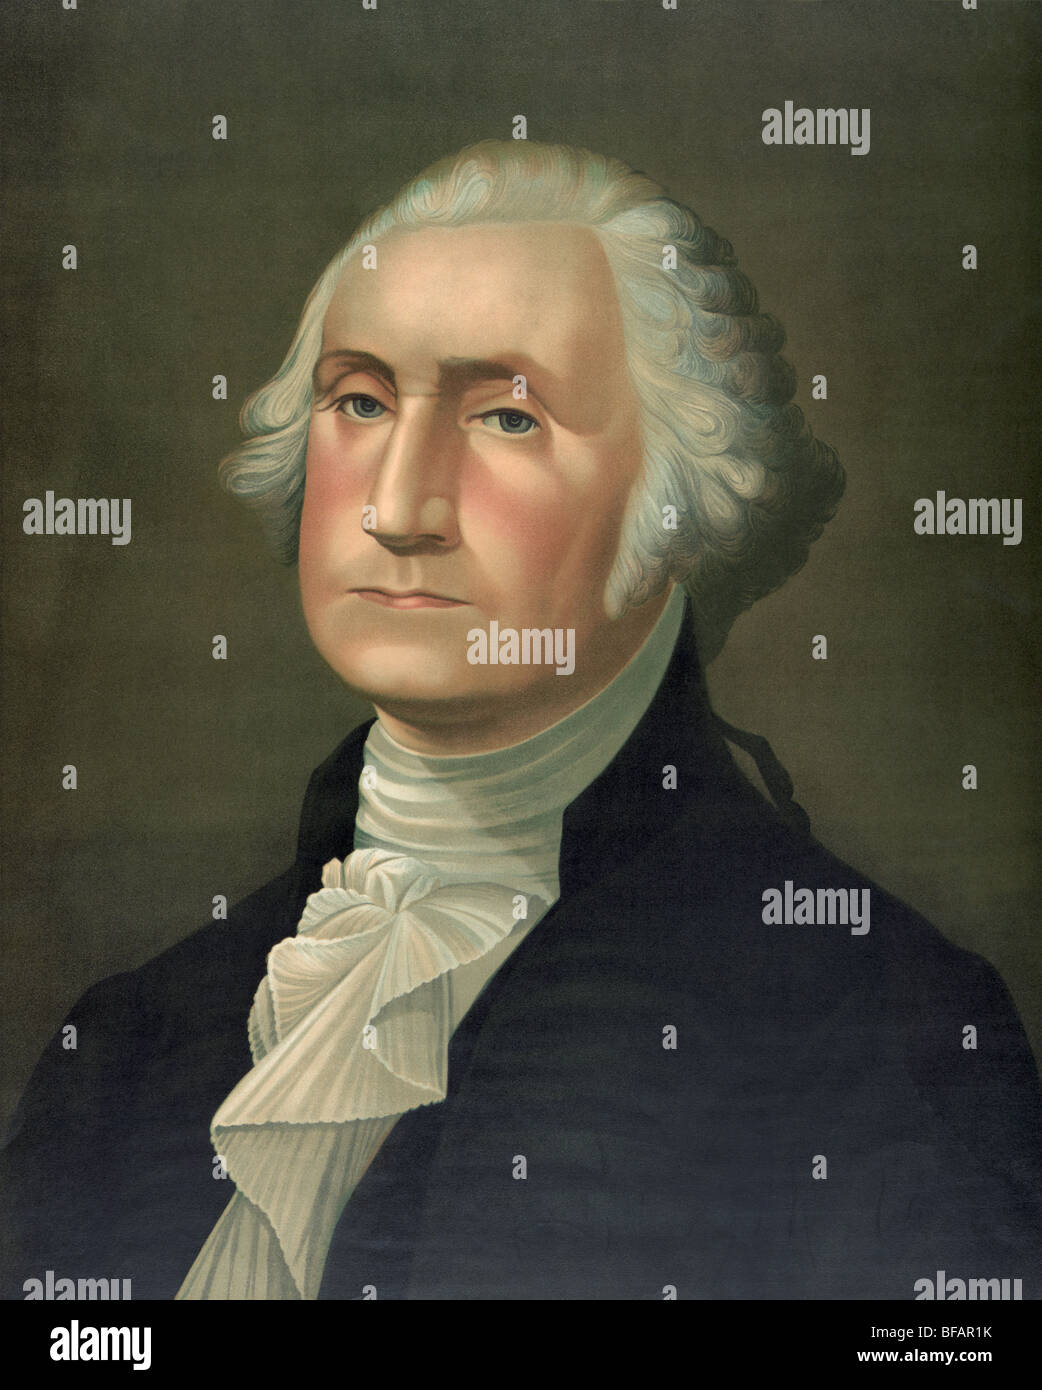 Portrait c1896 of George Washington - Washington (1732 - 1799) was the first US President (1789 - 1797). Stock Photo